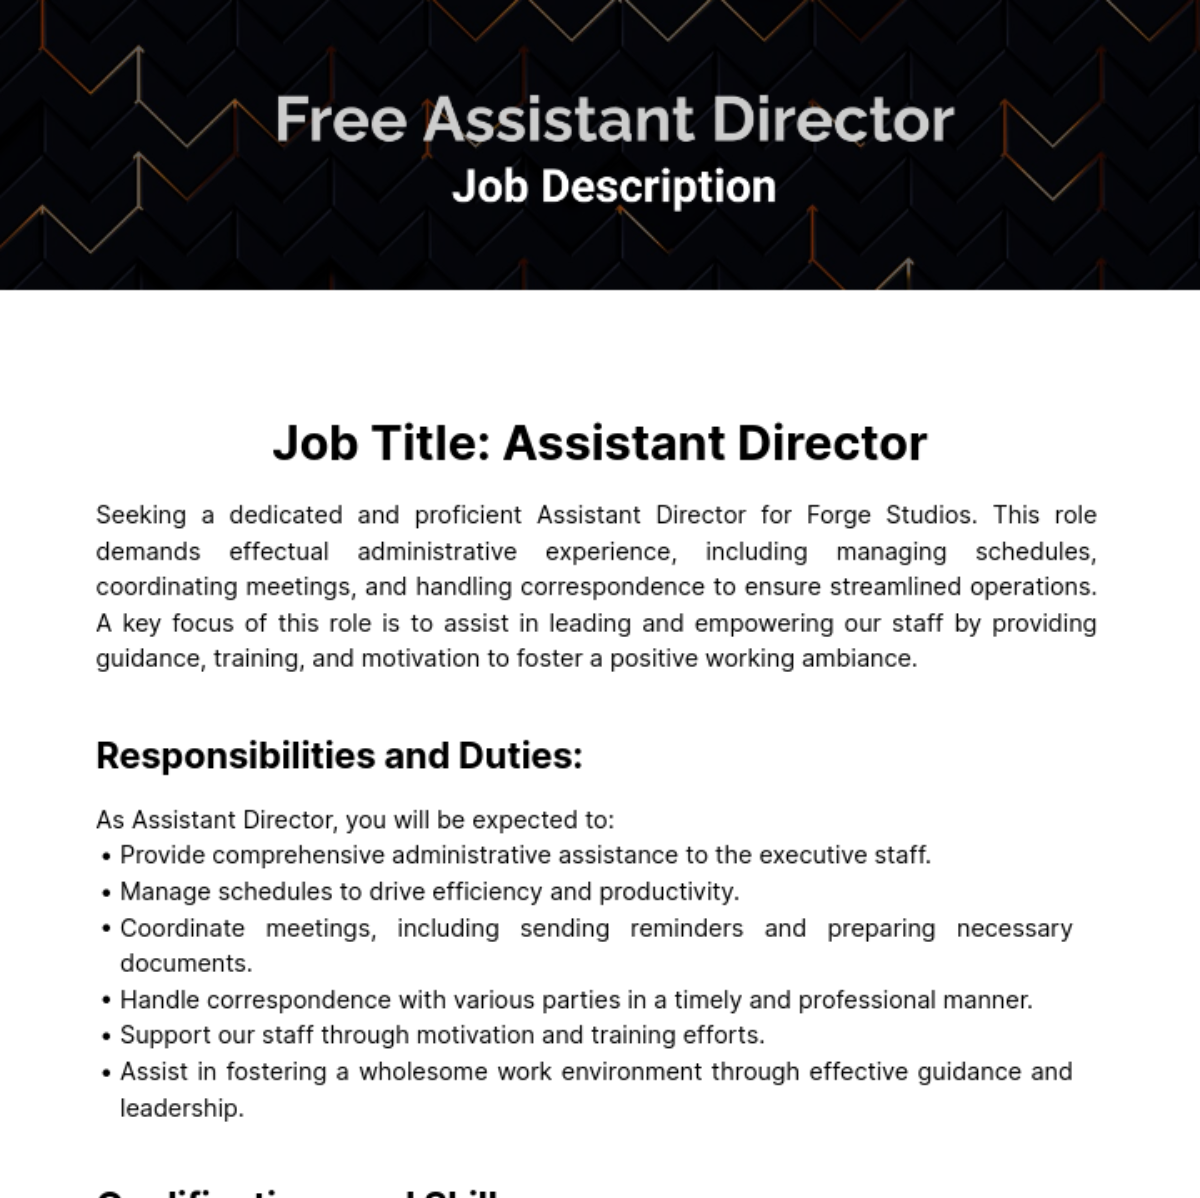 Assistant Director Job Description Template